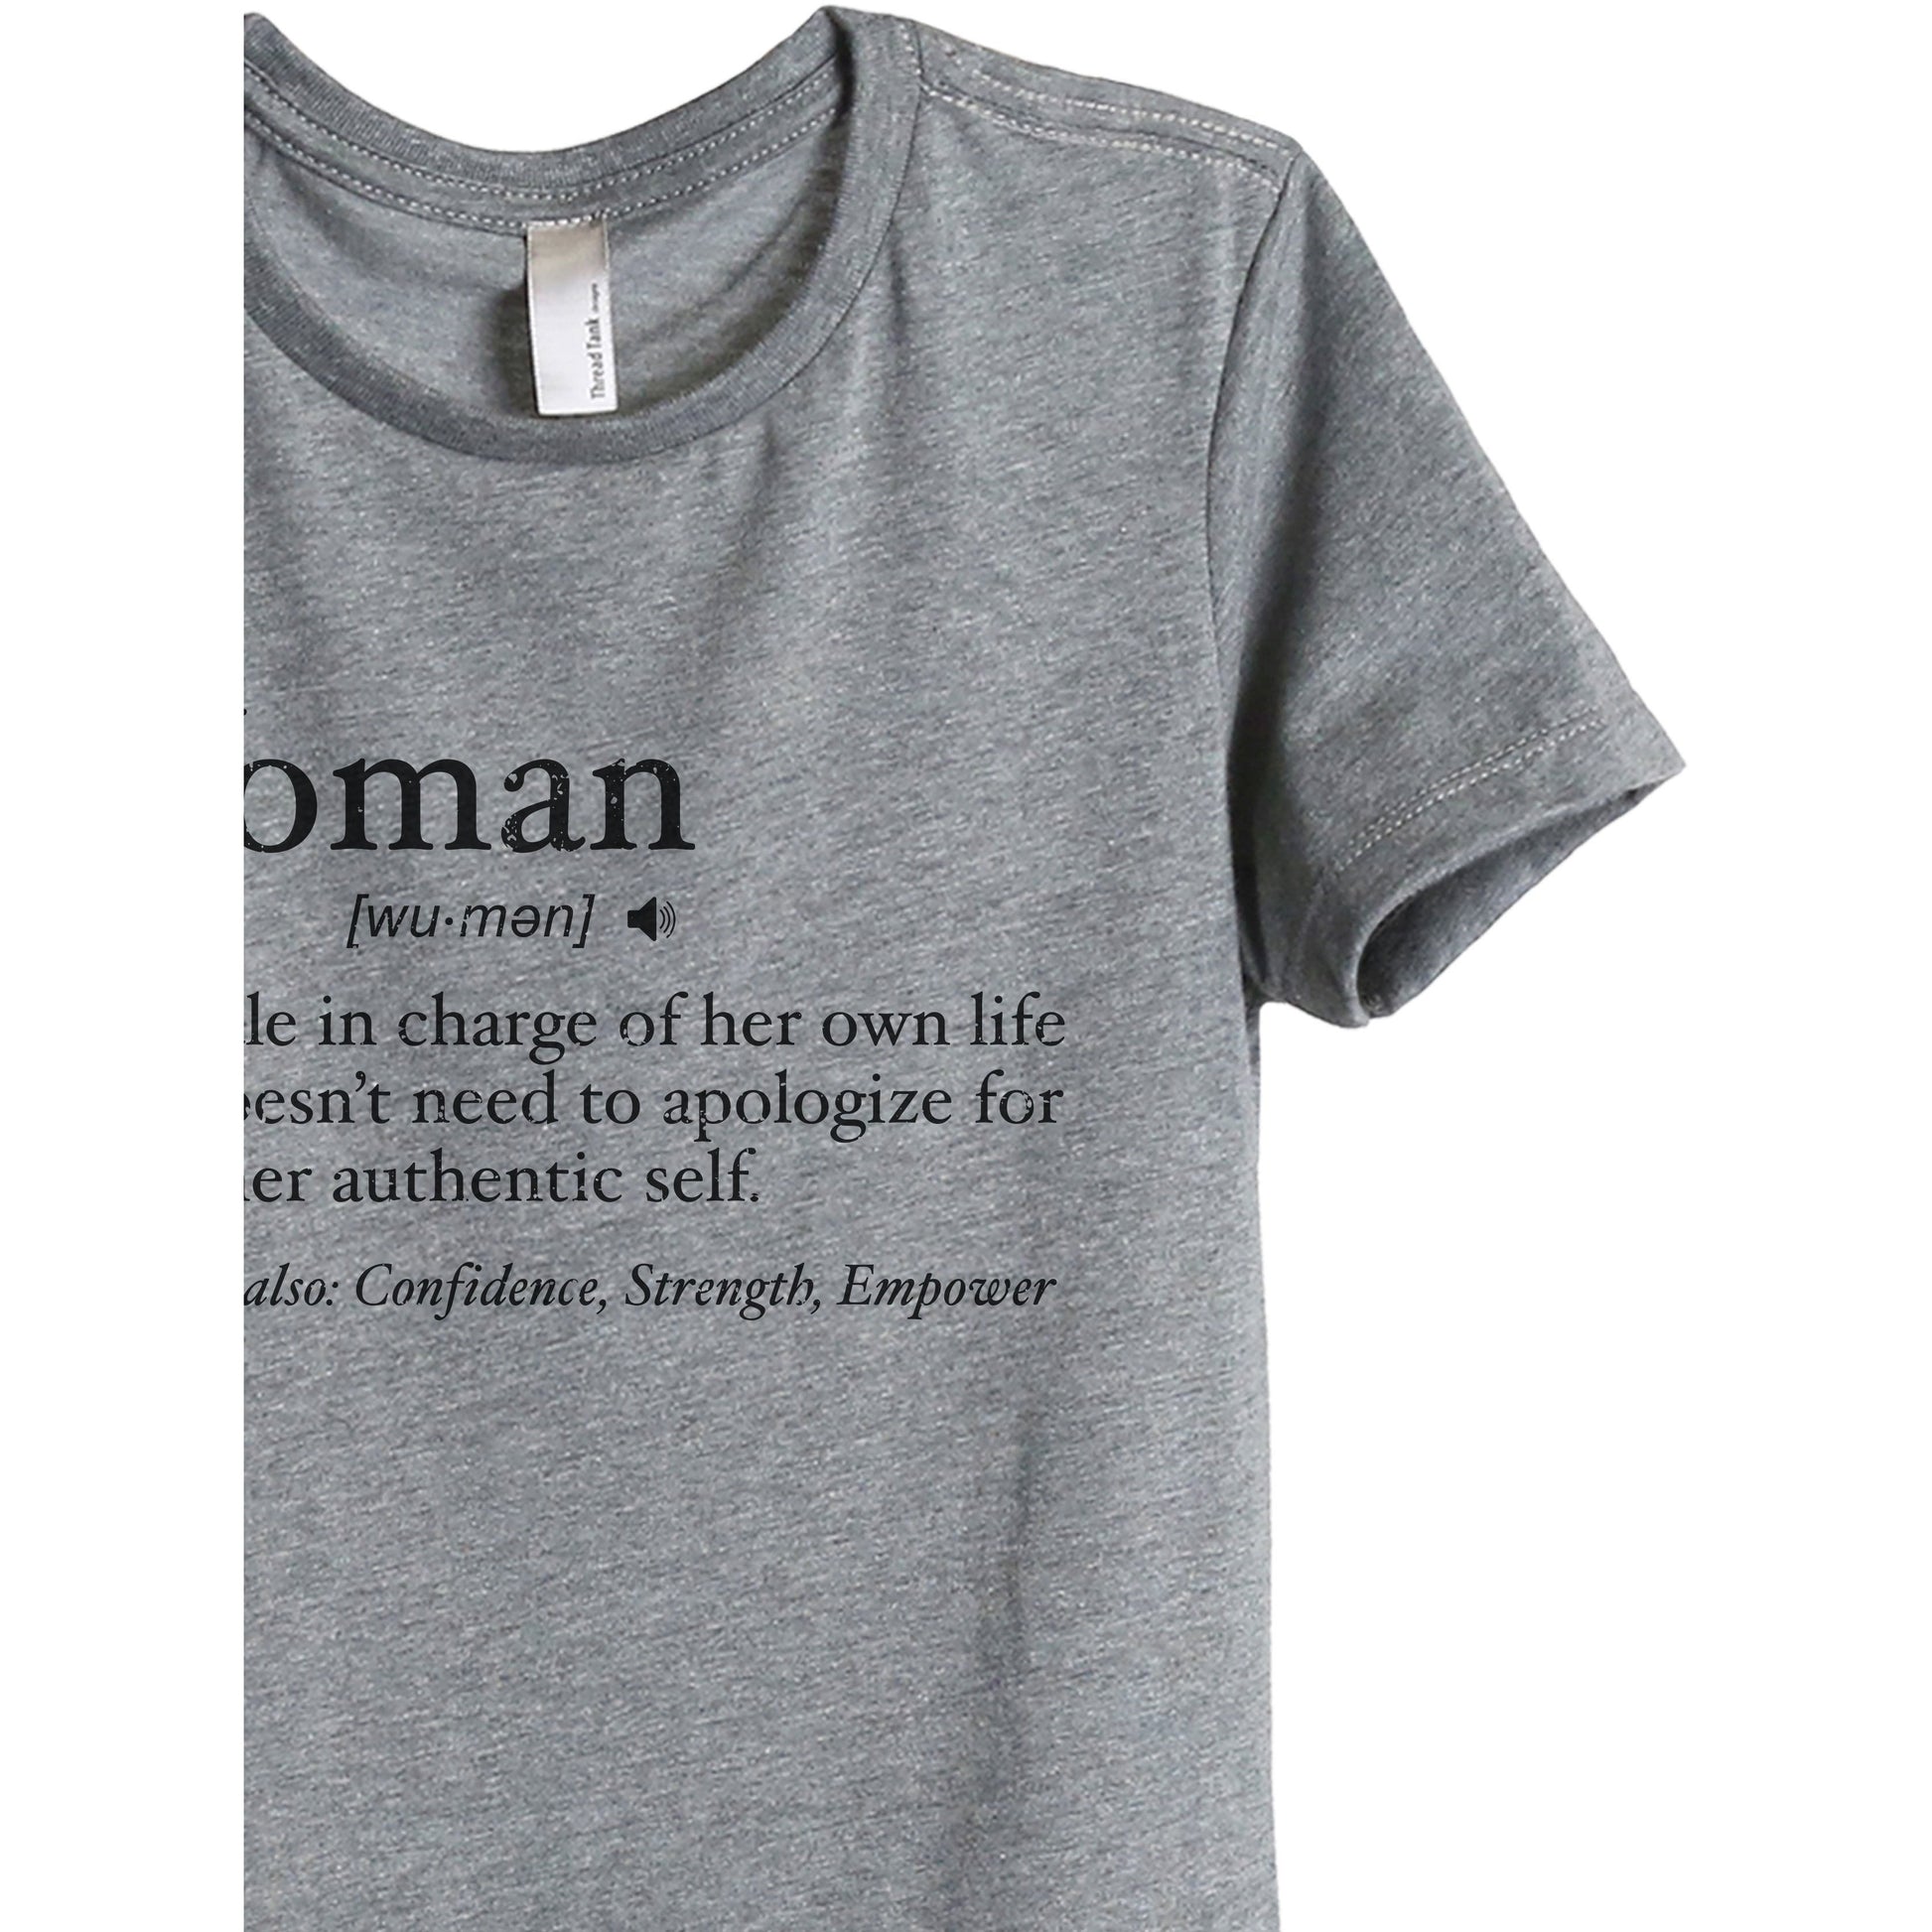 Fierce Definition Women's T-Shirt